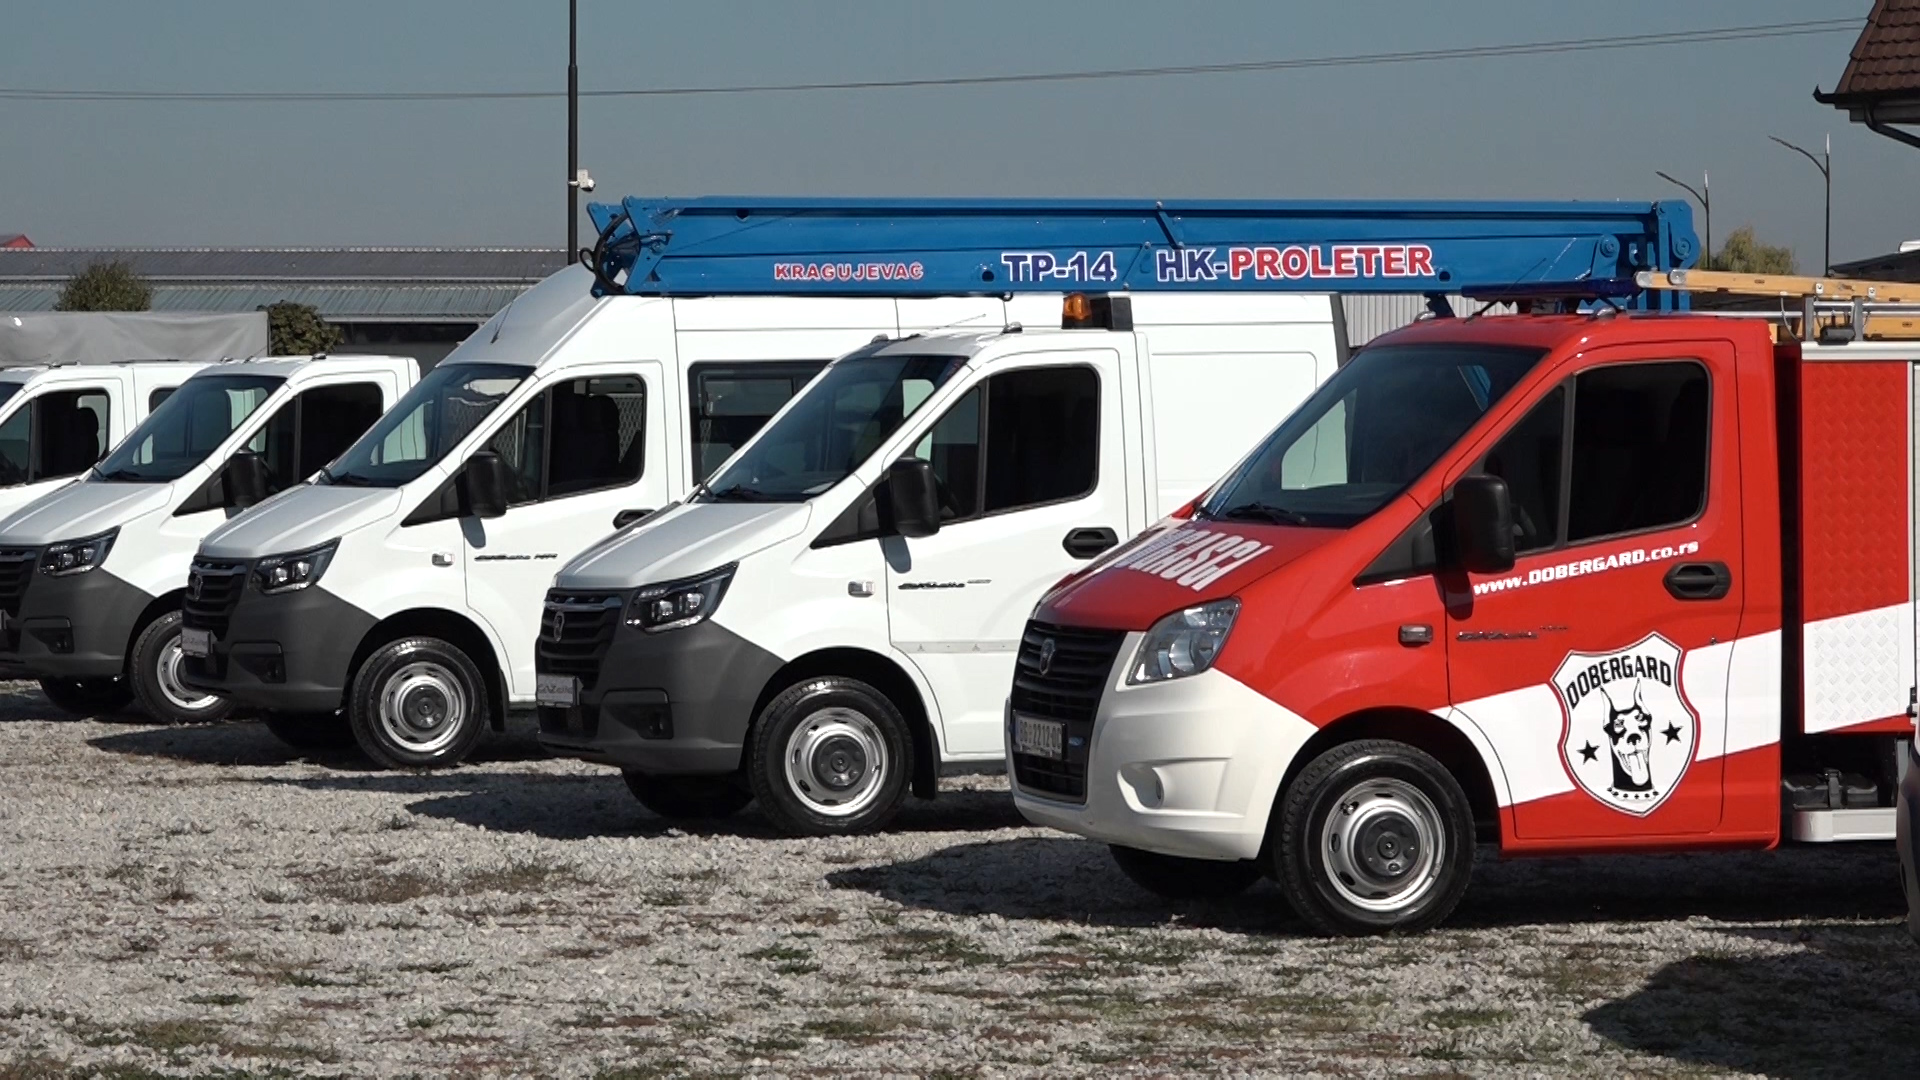 INTERAUTO – Promocija lakih, komercijalnih i dostavnih vozila